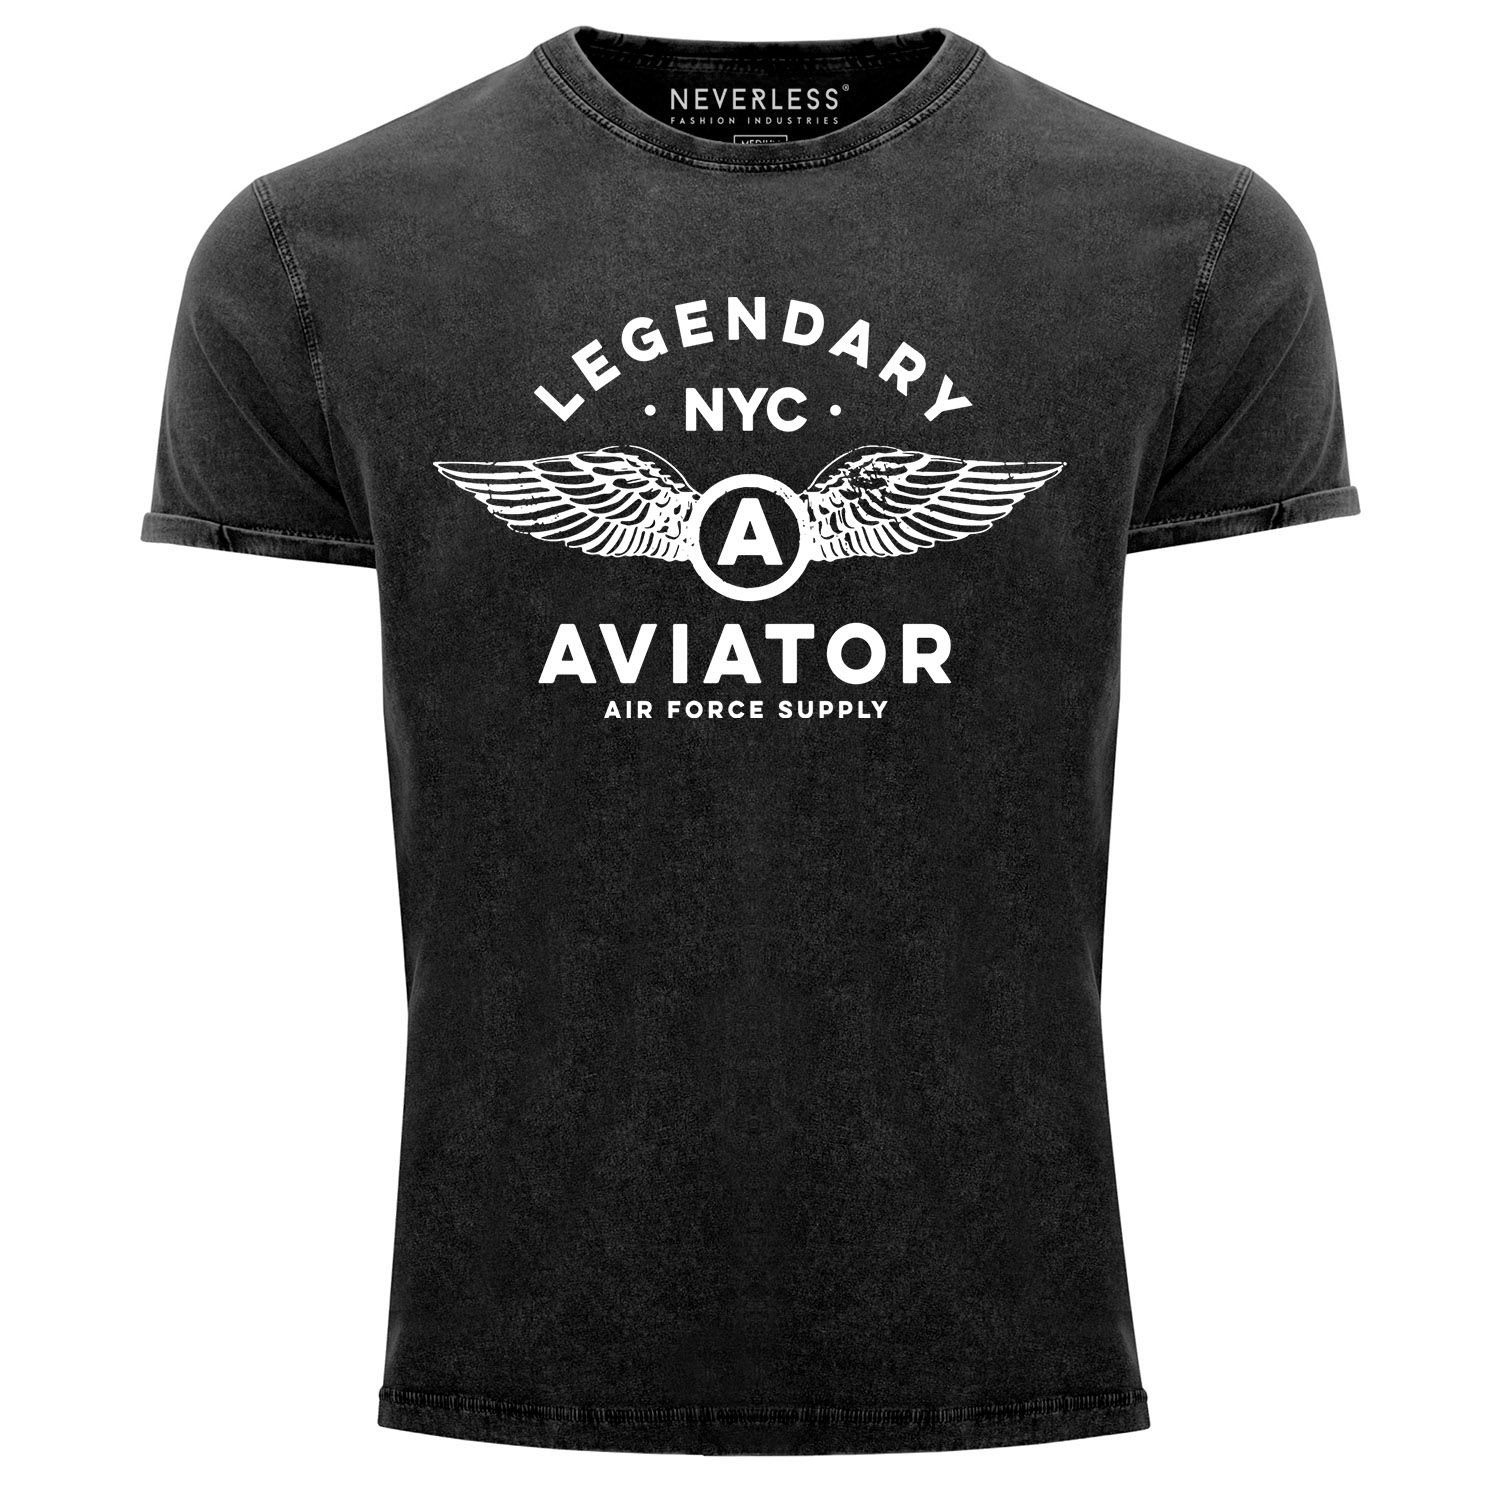 Neverless Print-Shirt Herren Vintage Shirt Legendary NYC Aviator Air Force Luftwaffe Flügel Printshirt Used Look Slim Fit Neverless® mit Print schwarz | T-Shirts